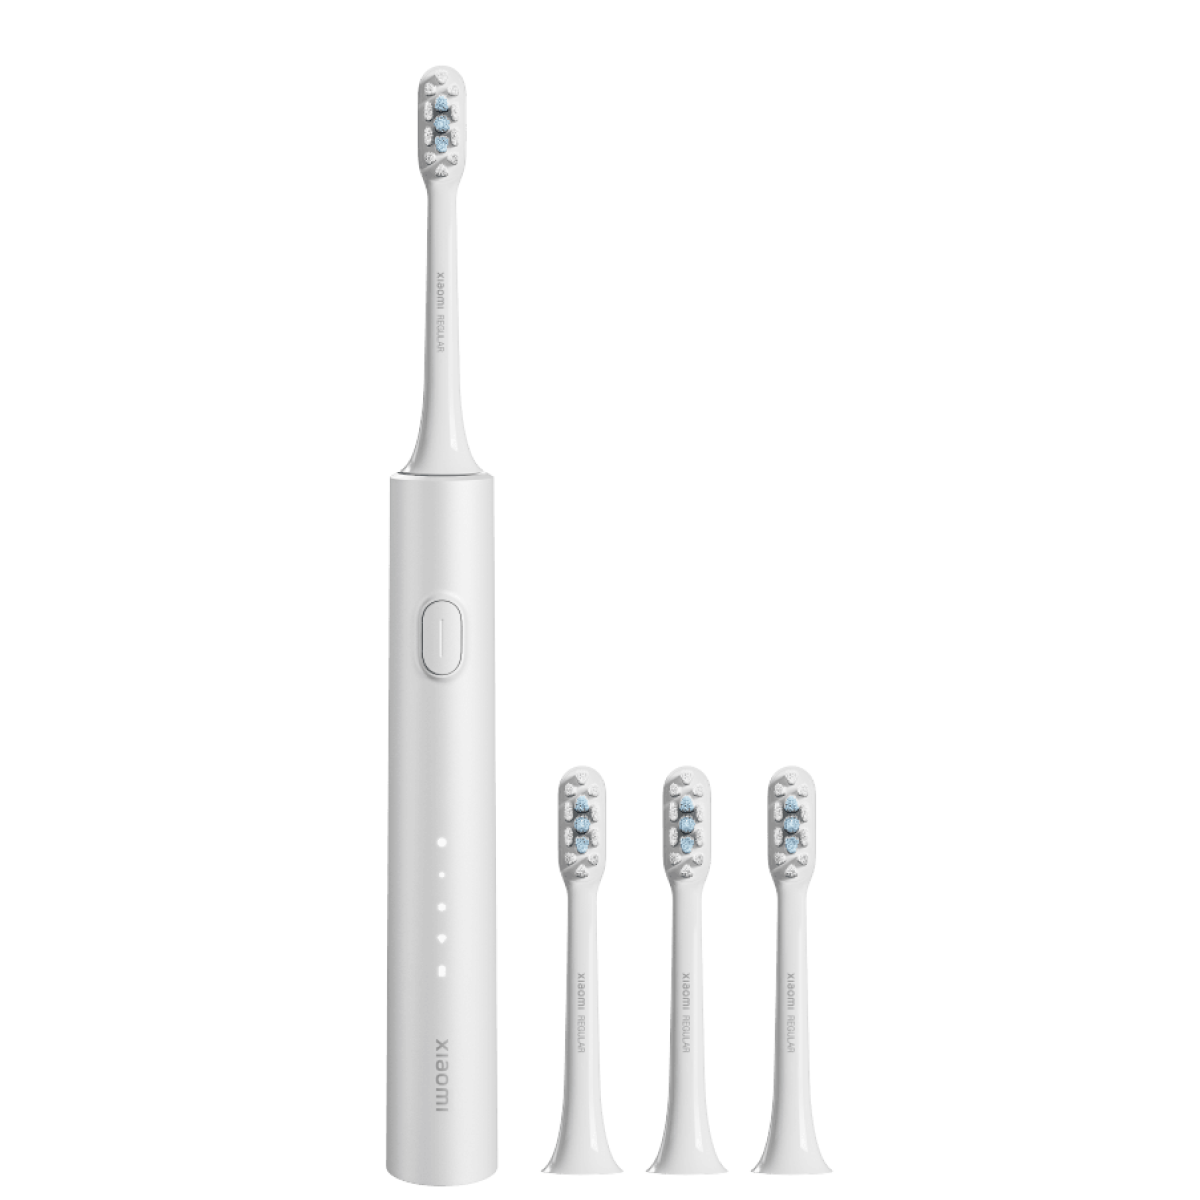 Электрическая зубная щетка Xiaomi Electric Toothbrush T302 серебристая отвертка электрическая hoto electric screwdriver set 25 in 1 qwlsd010